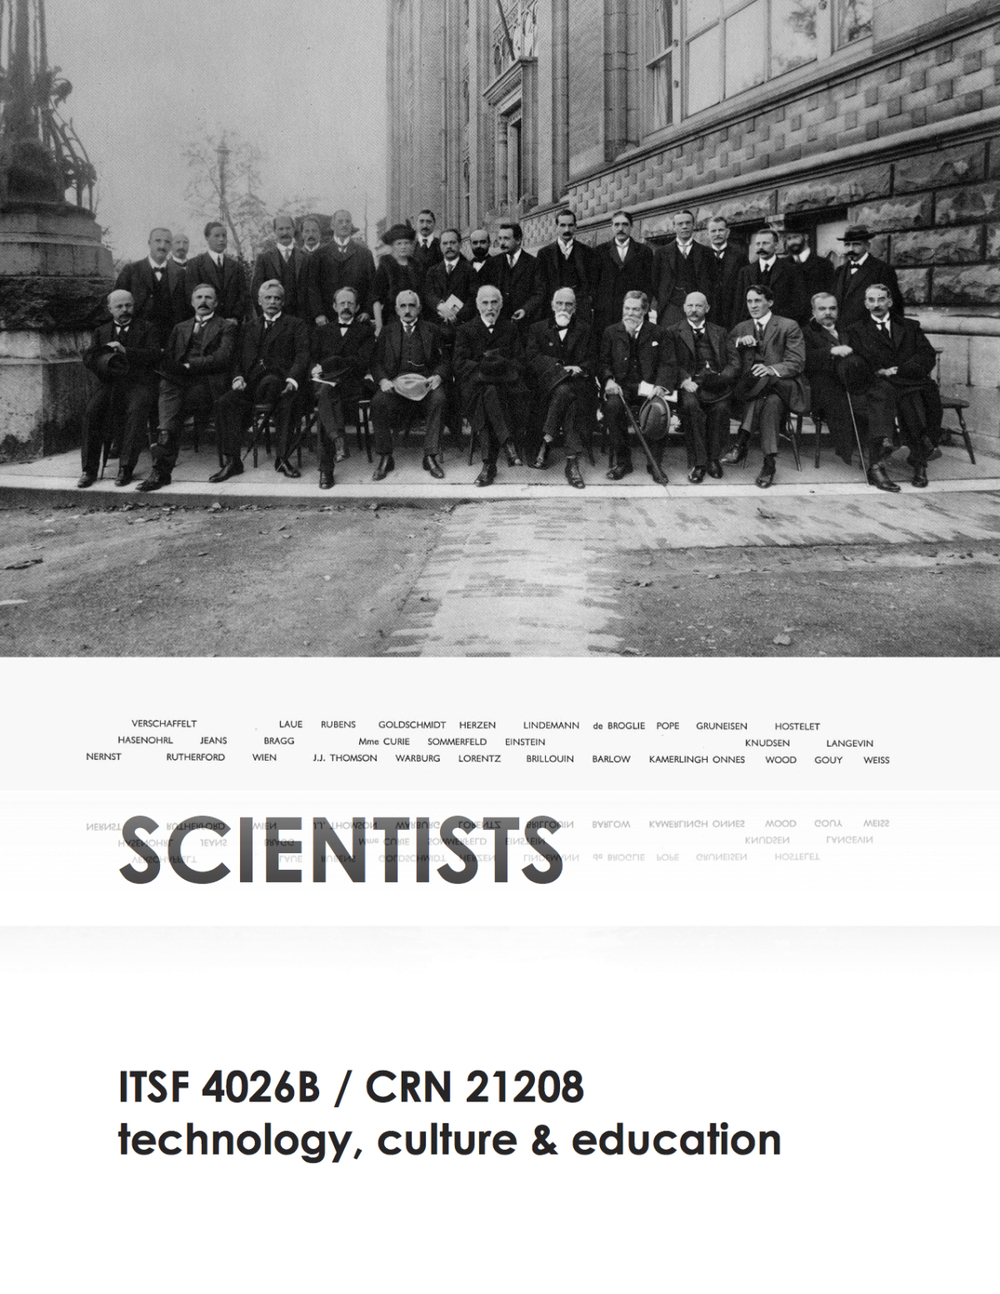 itsf 4026b flyers - scientists.jpg